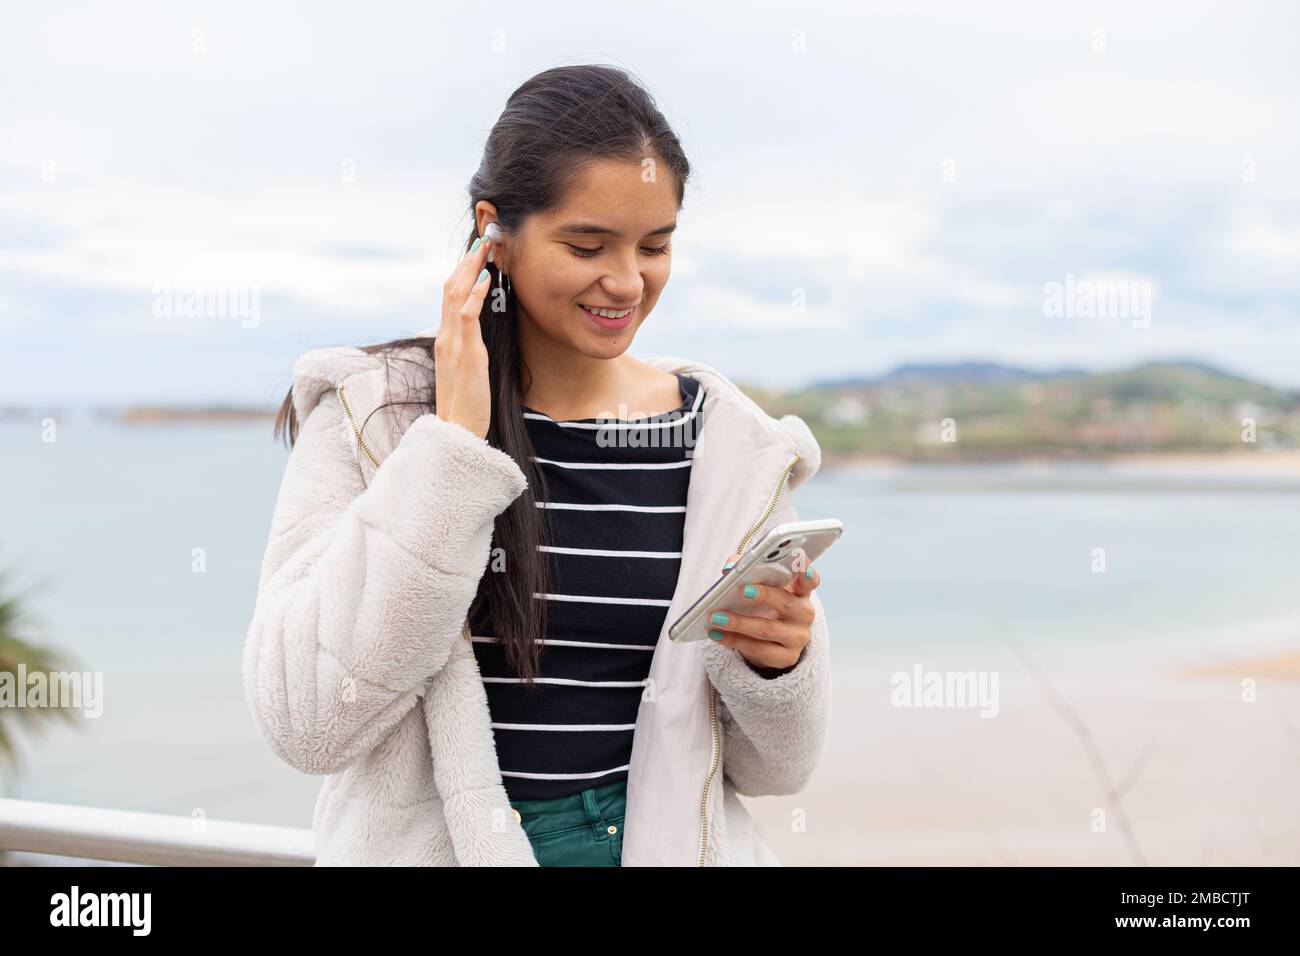 Hispanic lady with smartphone listening to music in wireless earphones Stock Photo